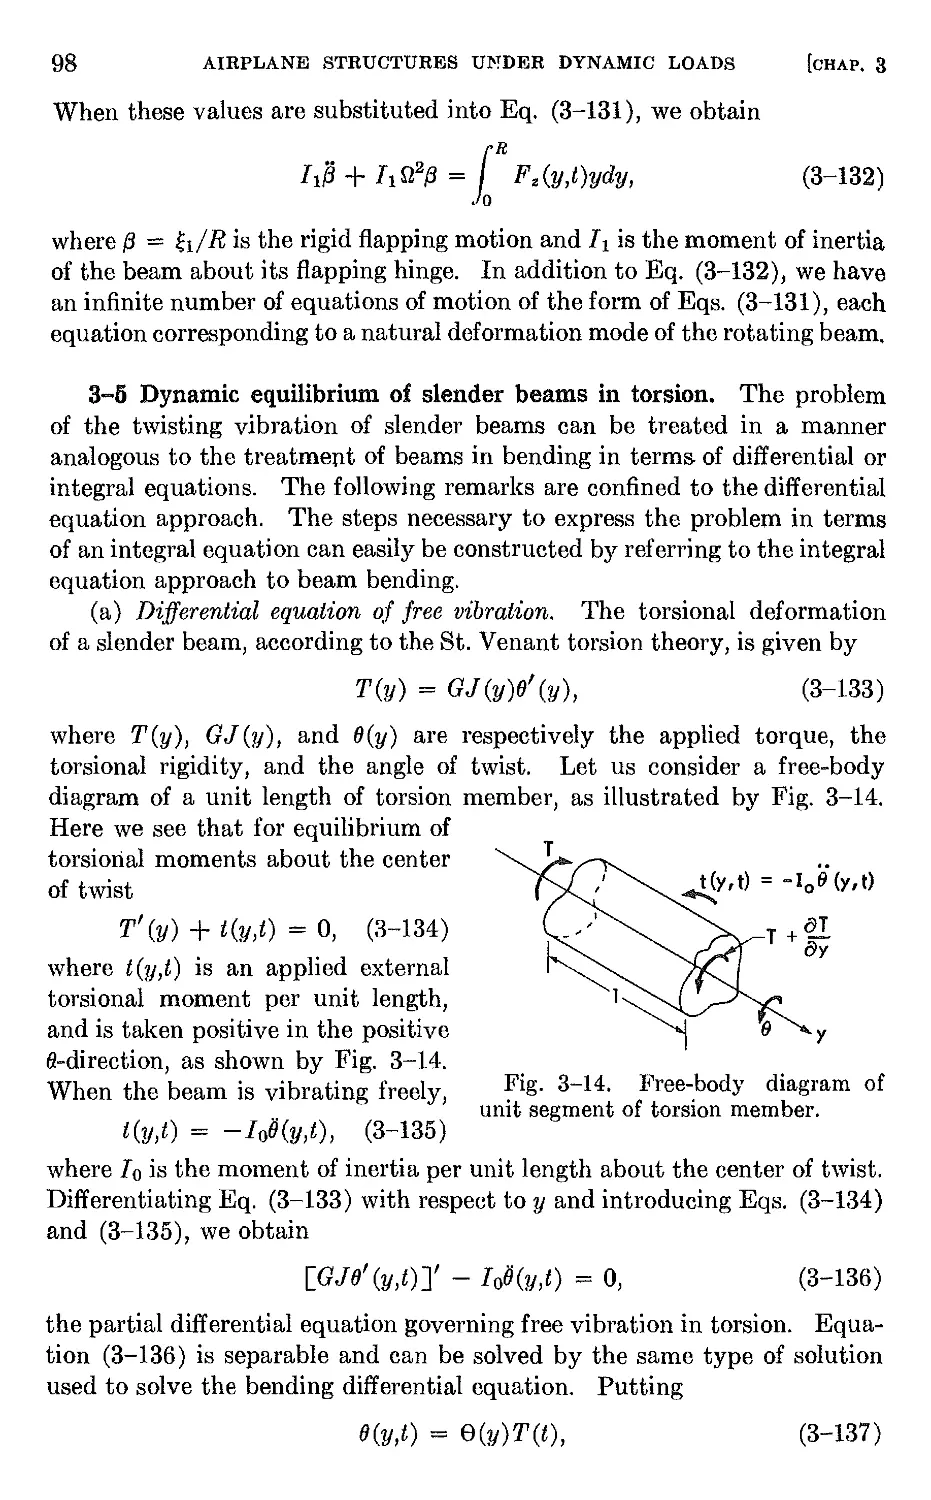 3.5 Dynamic equilibrium of slender beams in torsion